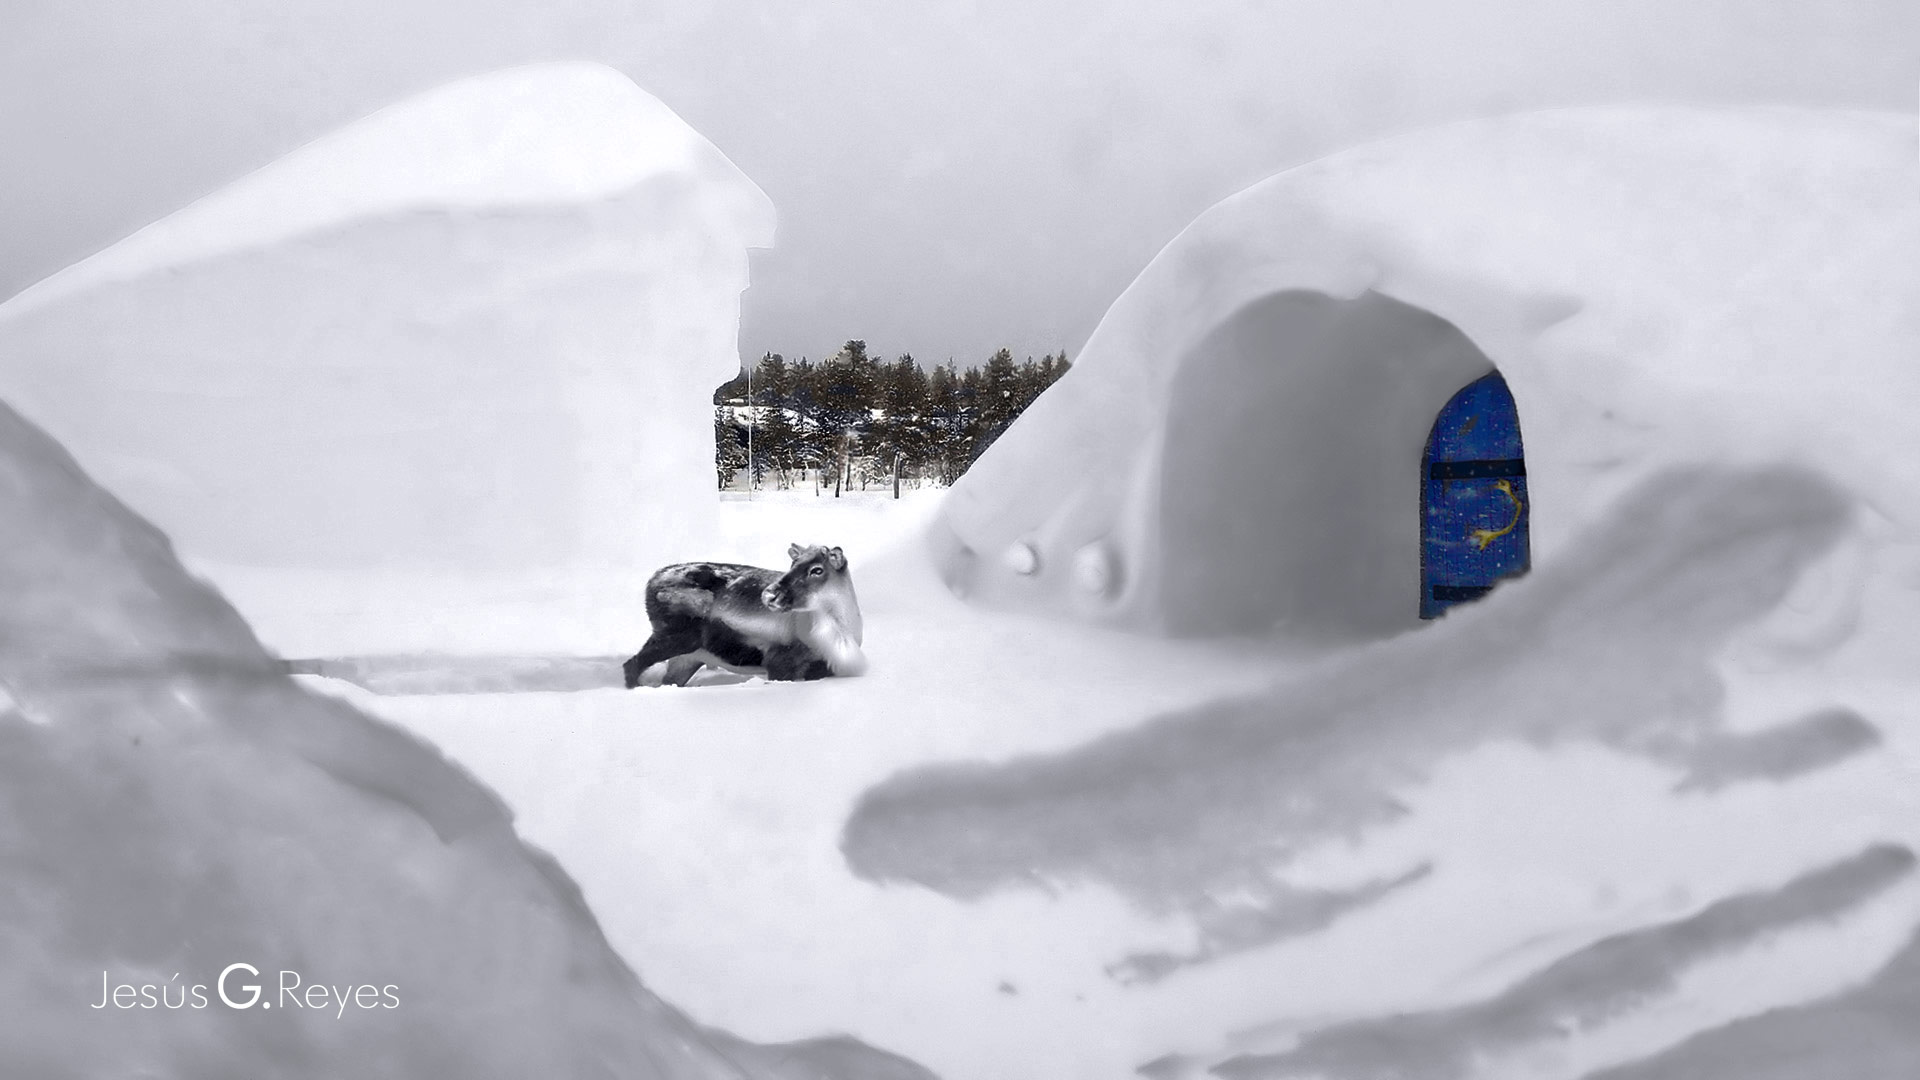 Kakslauttanen Arctic Resort. Laponia finlandesa.